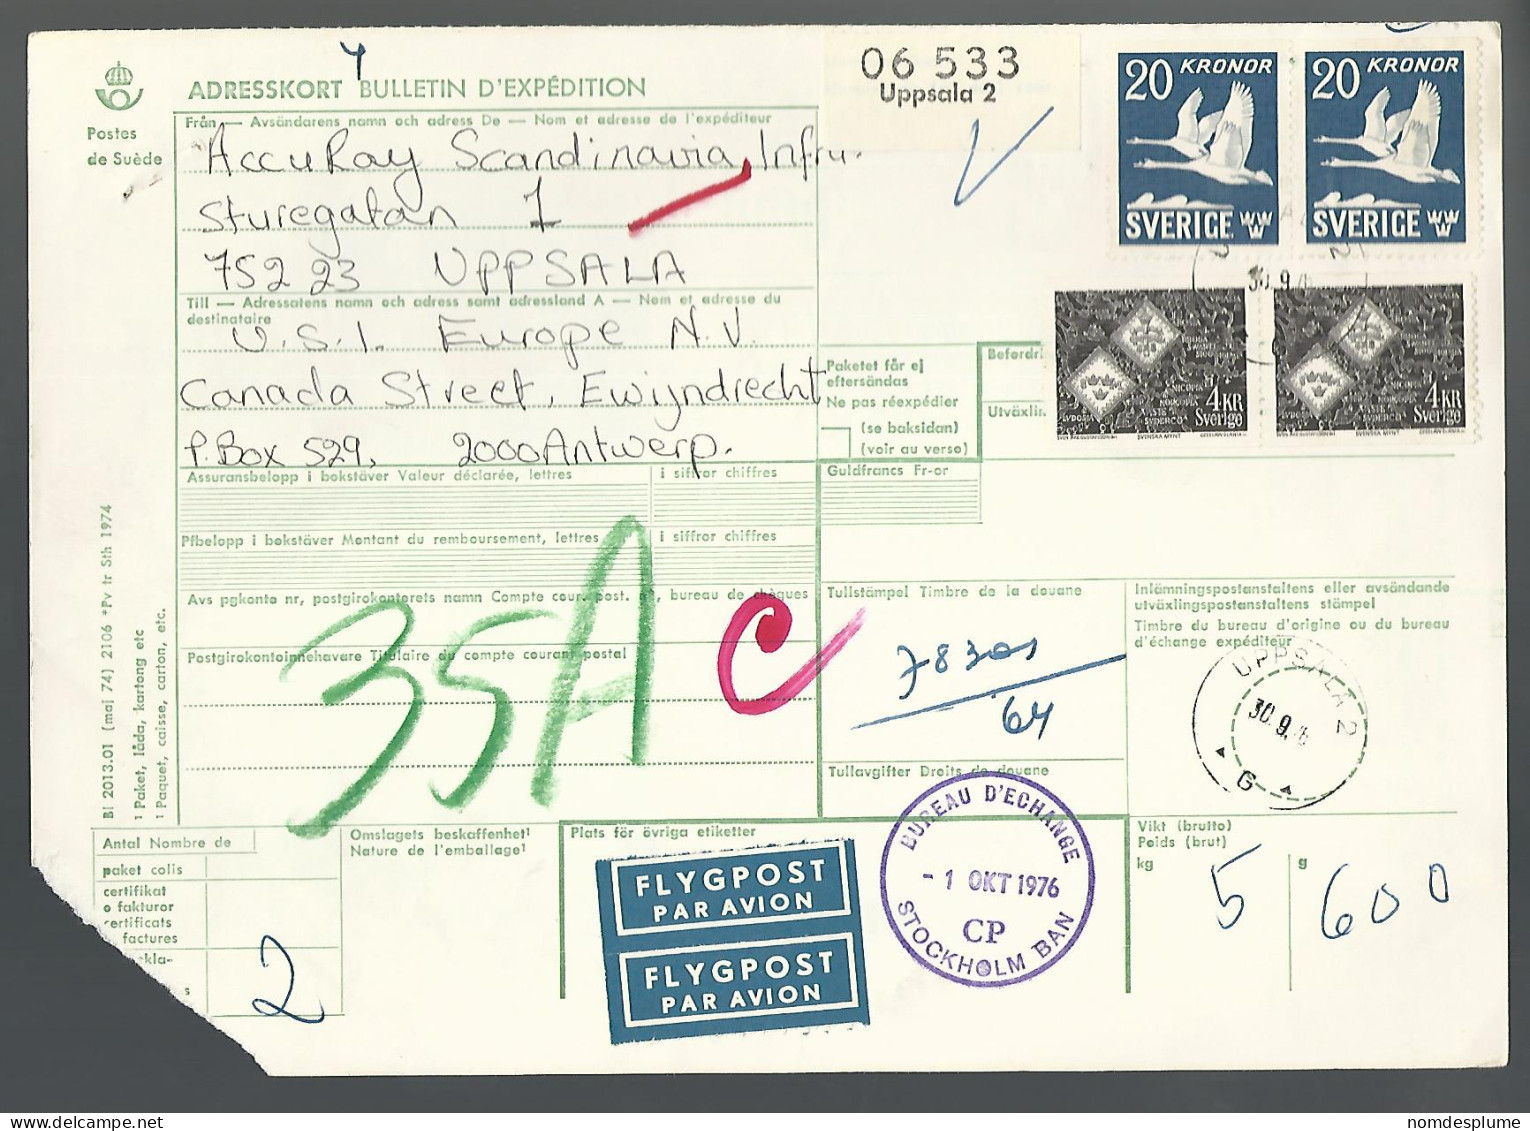 58526) Sweden Adresskort Bulletin D'Expedition 1976 Postmark Cancel Air Mail - Covers & Documents